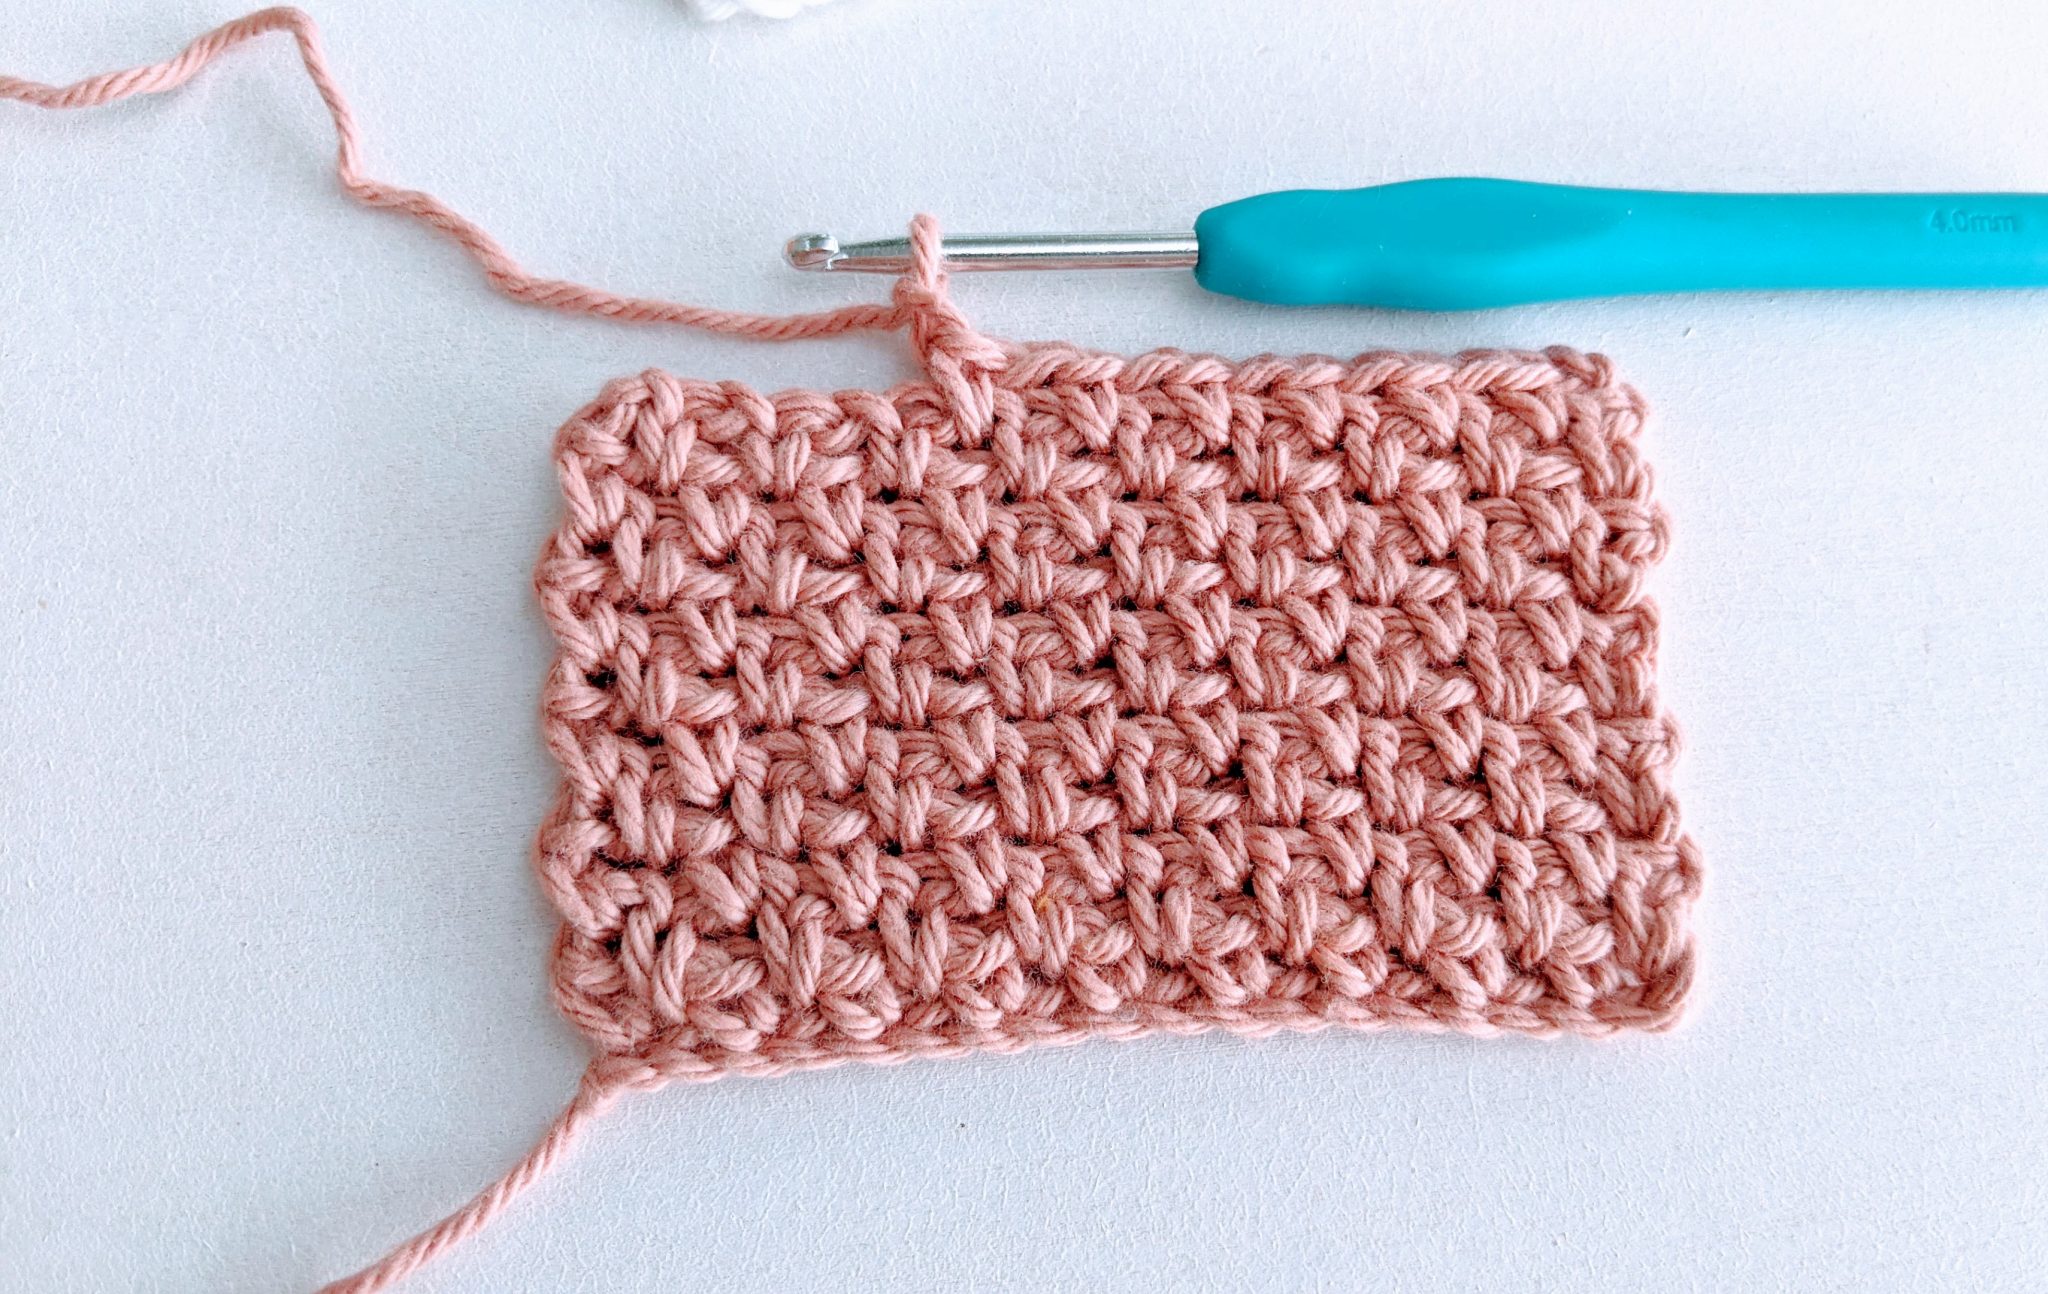 Moss stitch crochet tutorial